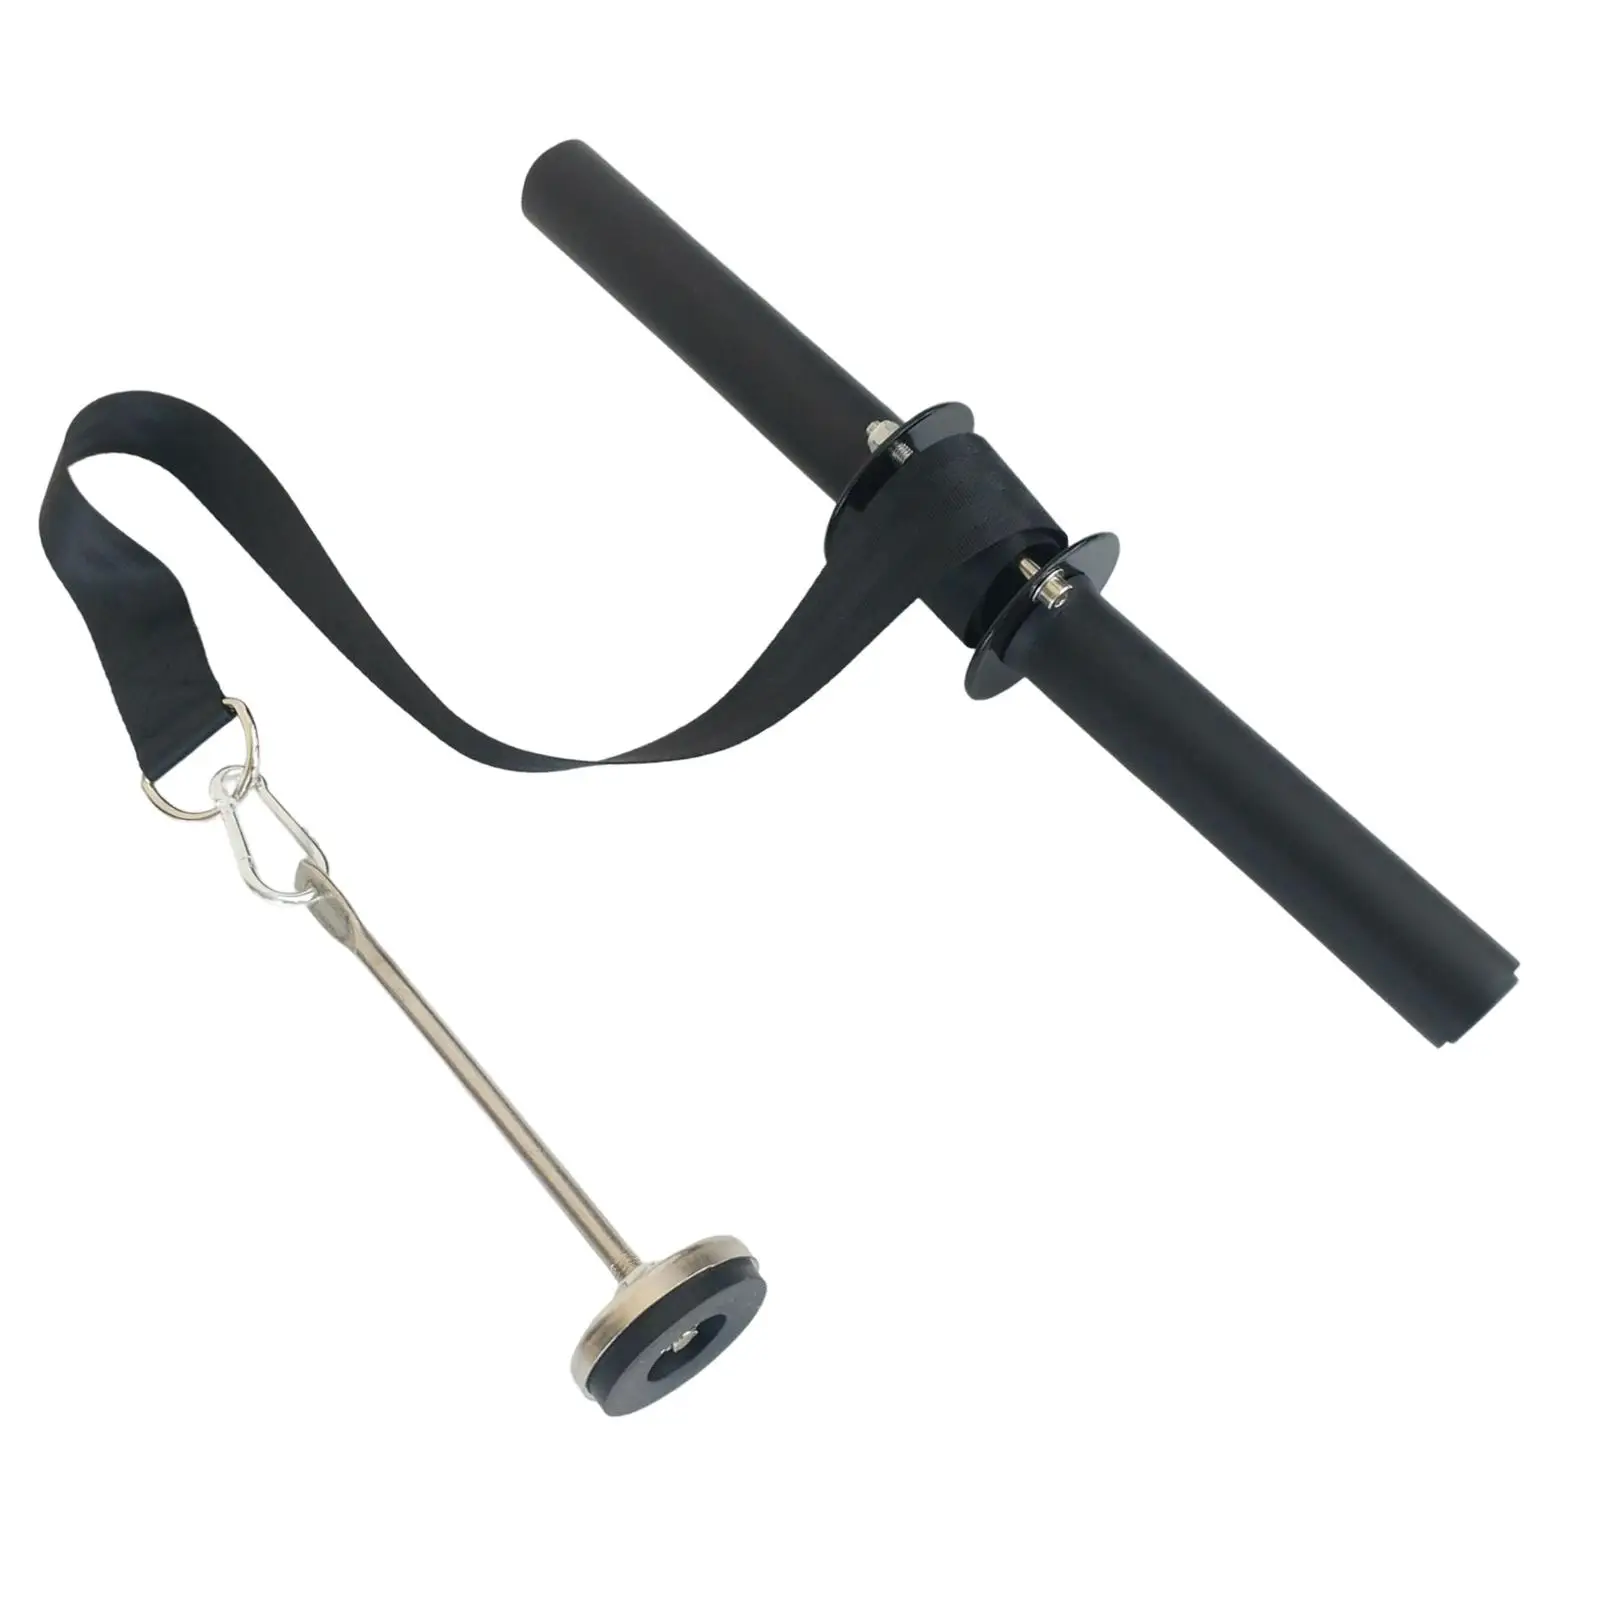 Wrist and Forearm Blaster Strengthener Weight-Bearing Rope Training Exerciser Curler Forearm Blaster for Workout Home Equipment